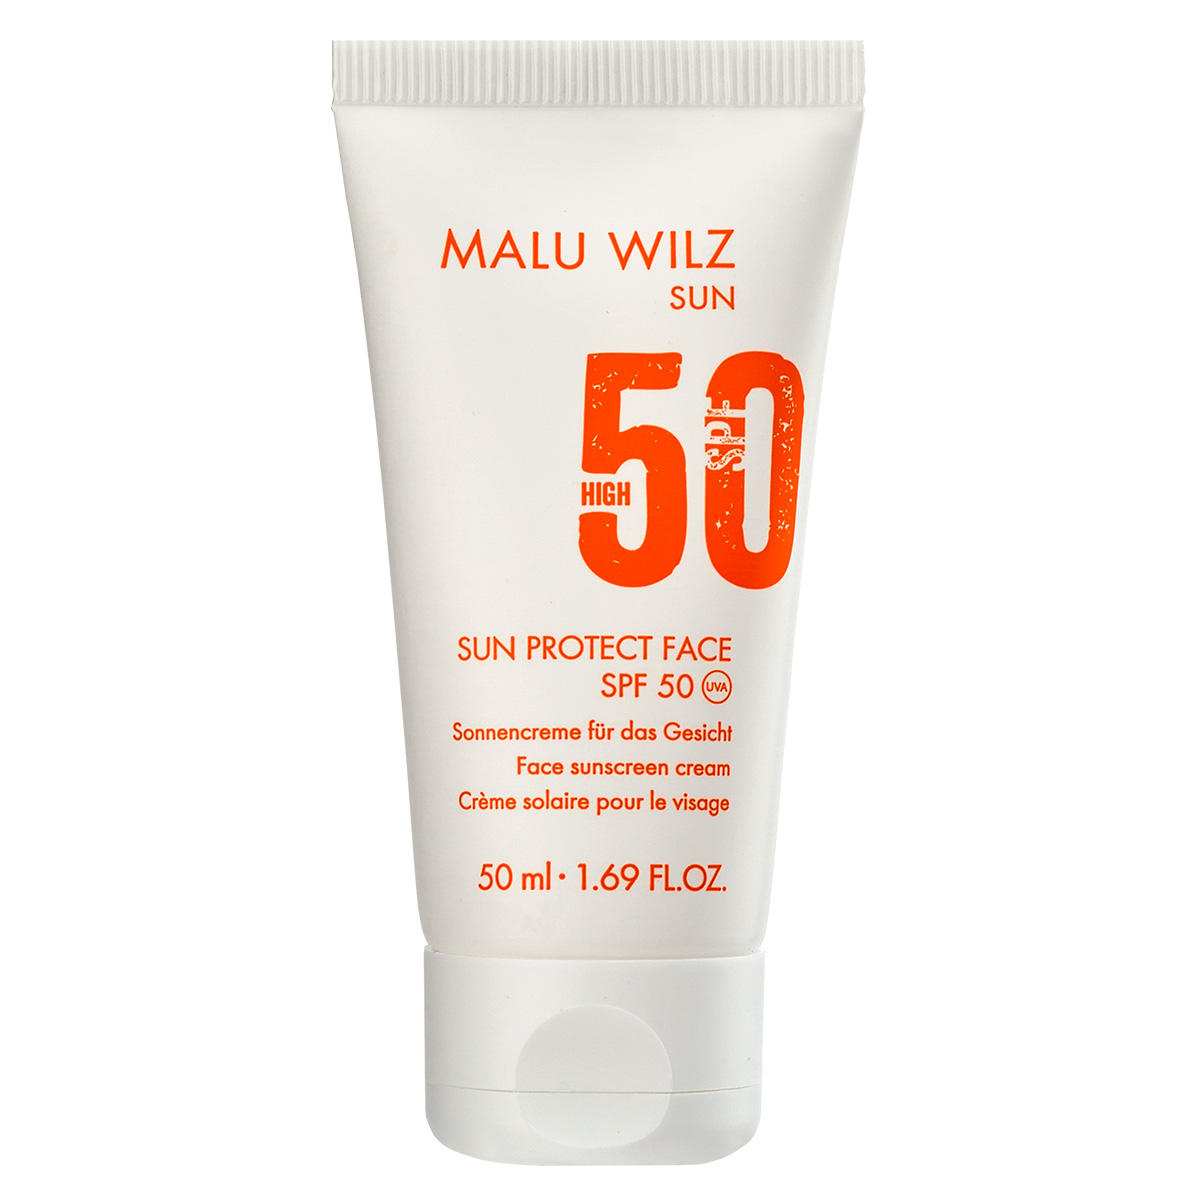 Malu Wilz Sun Sun Protect Gezicht SPF 50 50 ml - 1